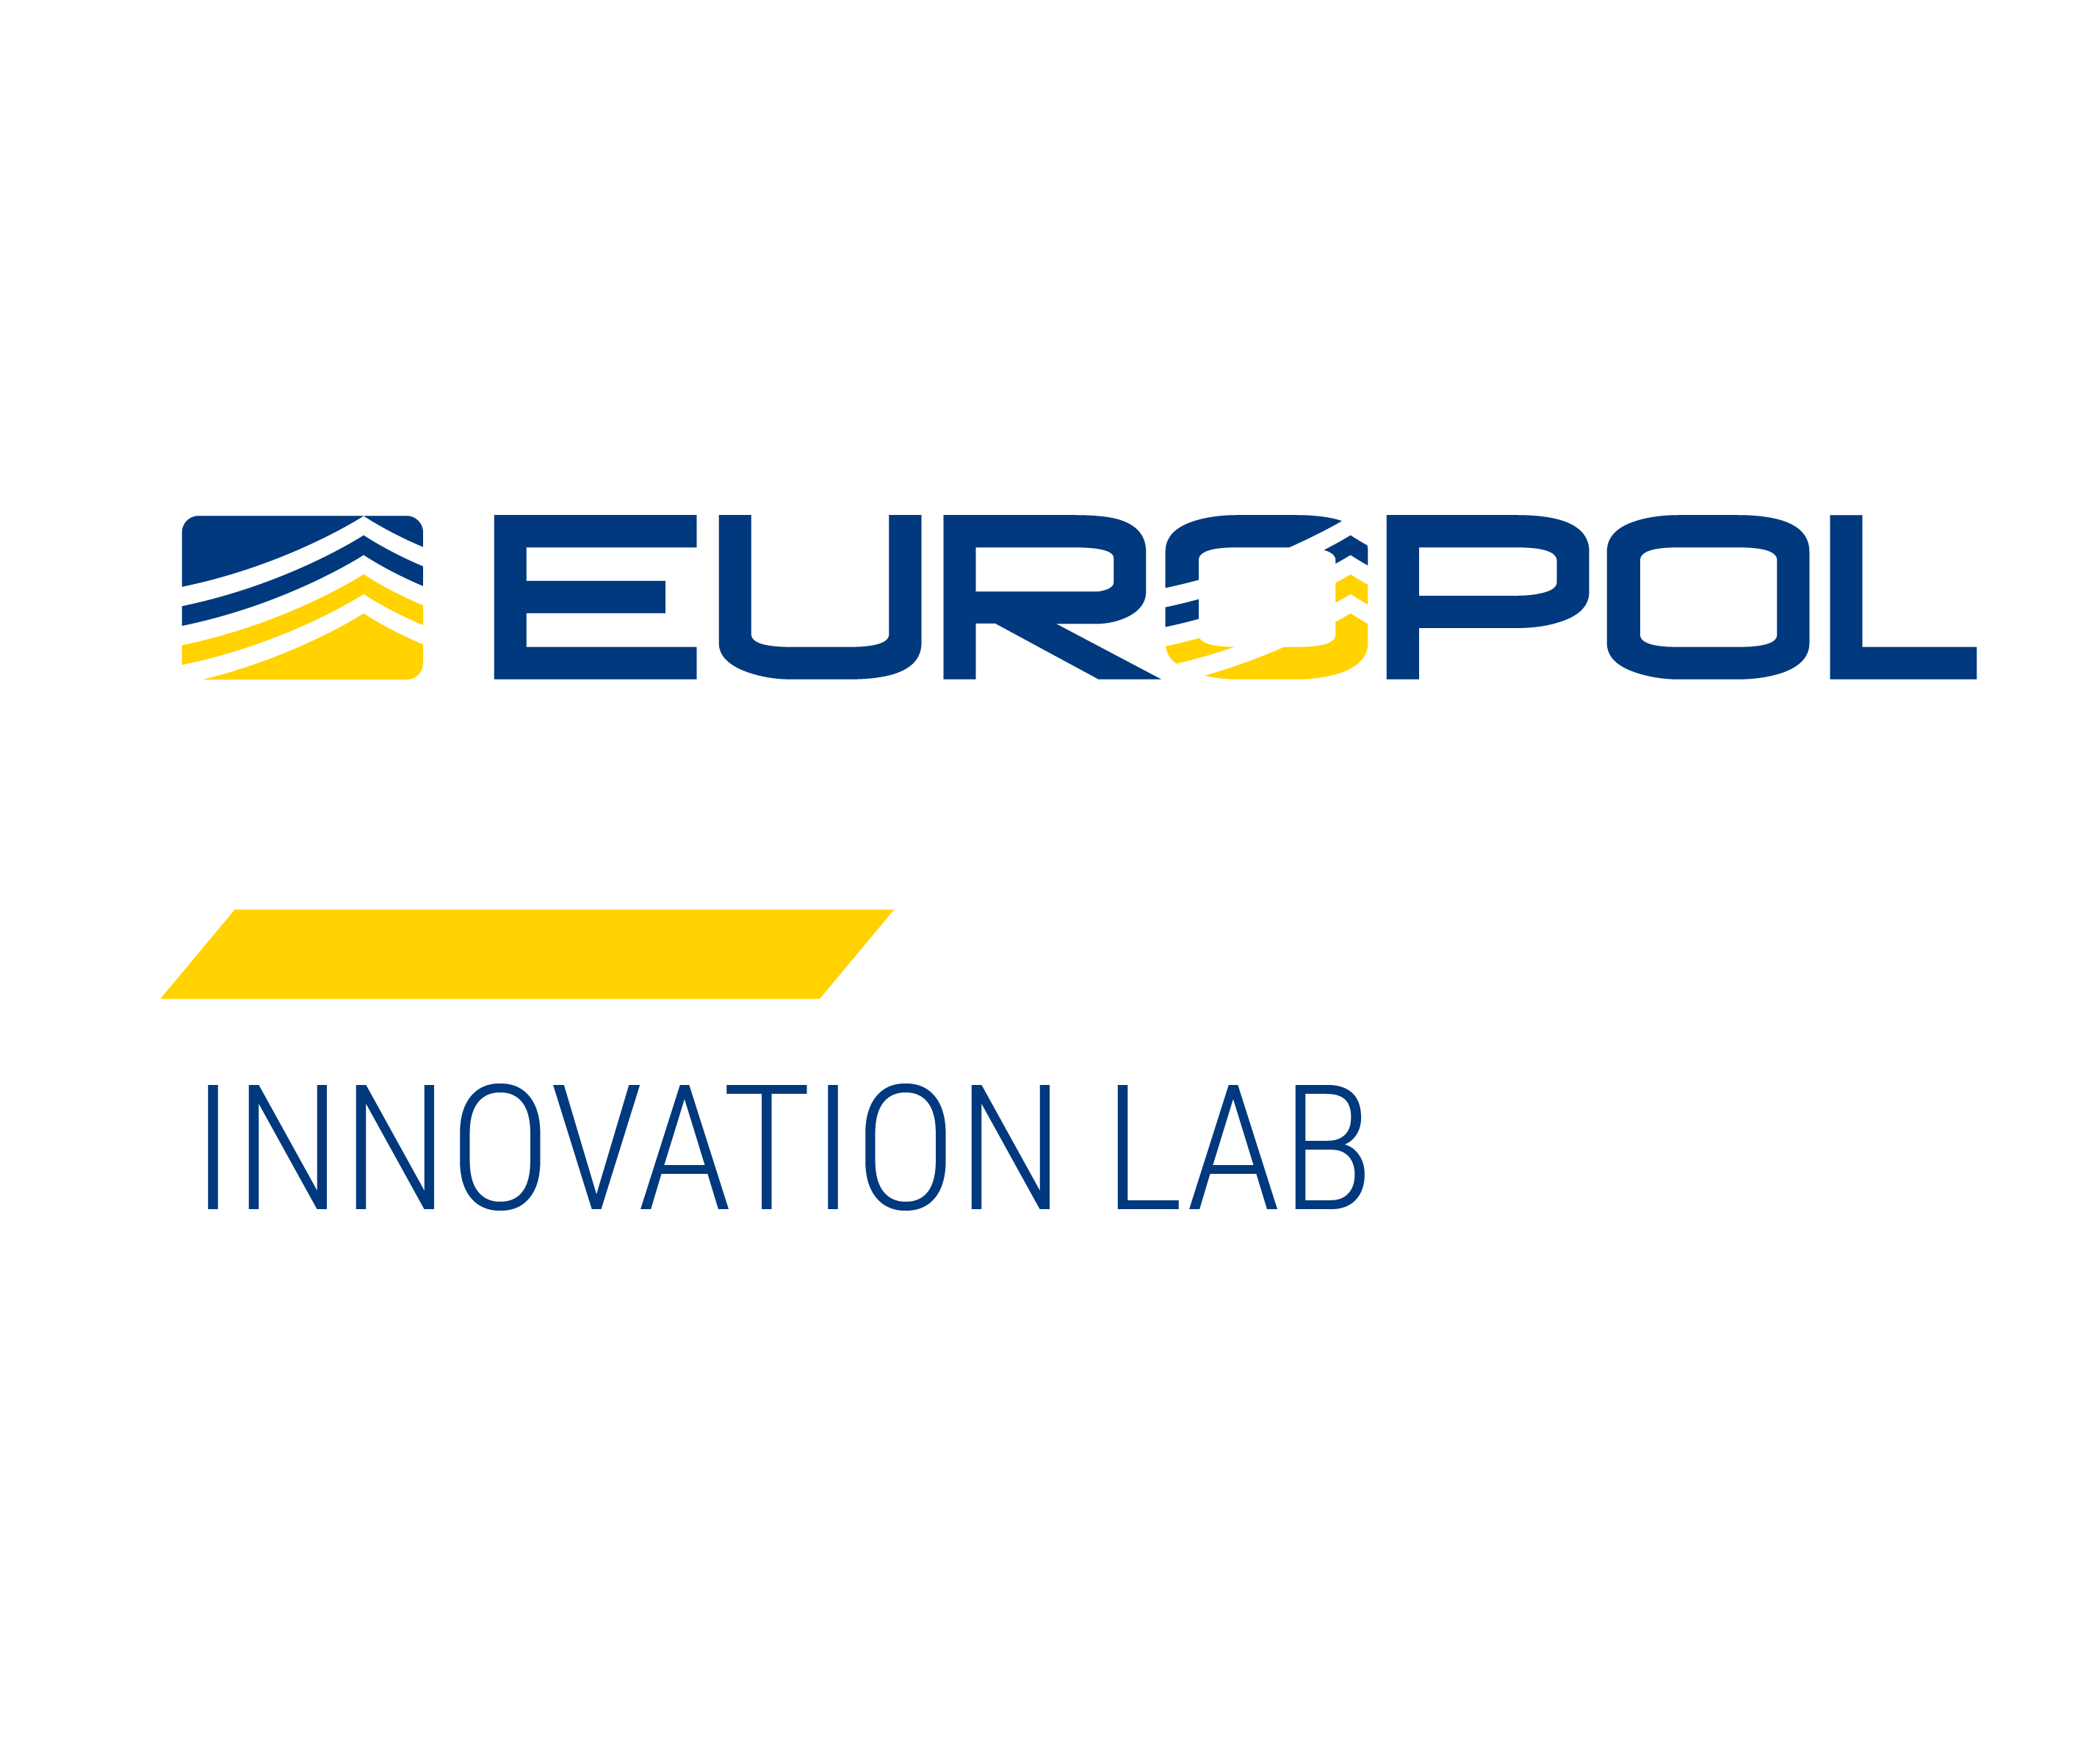 Europol Innovation Lab